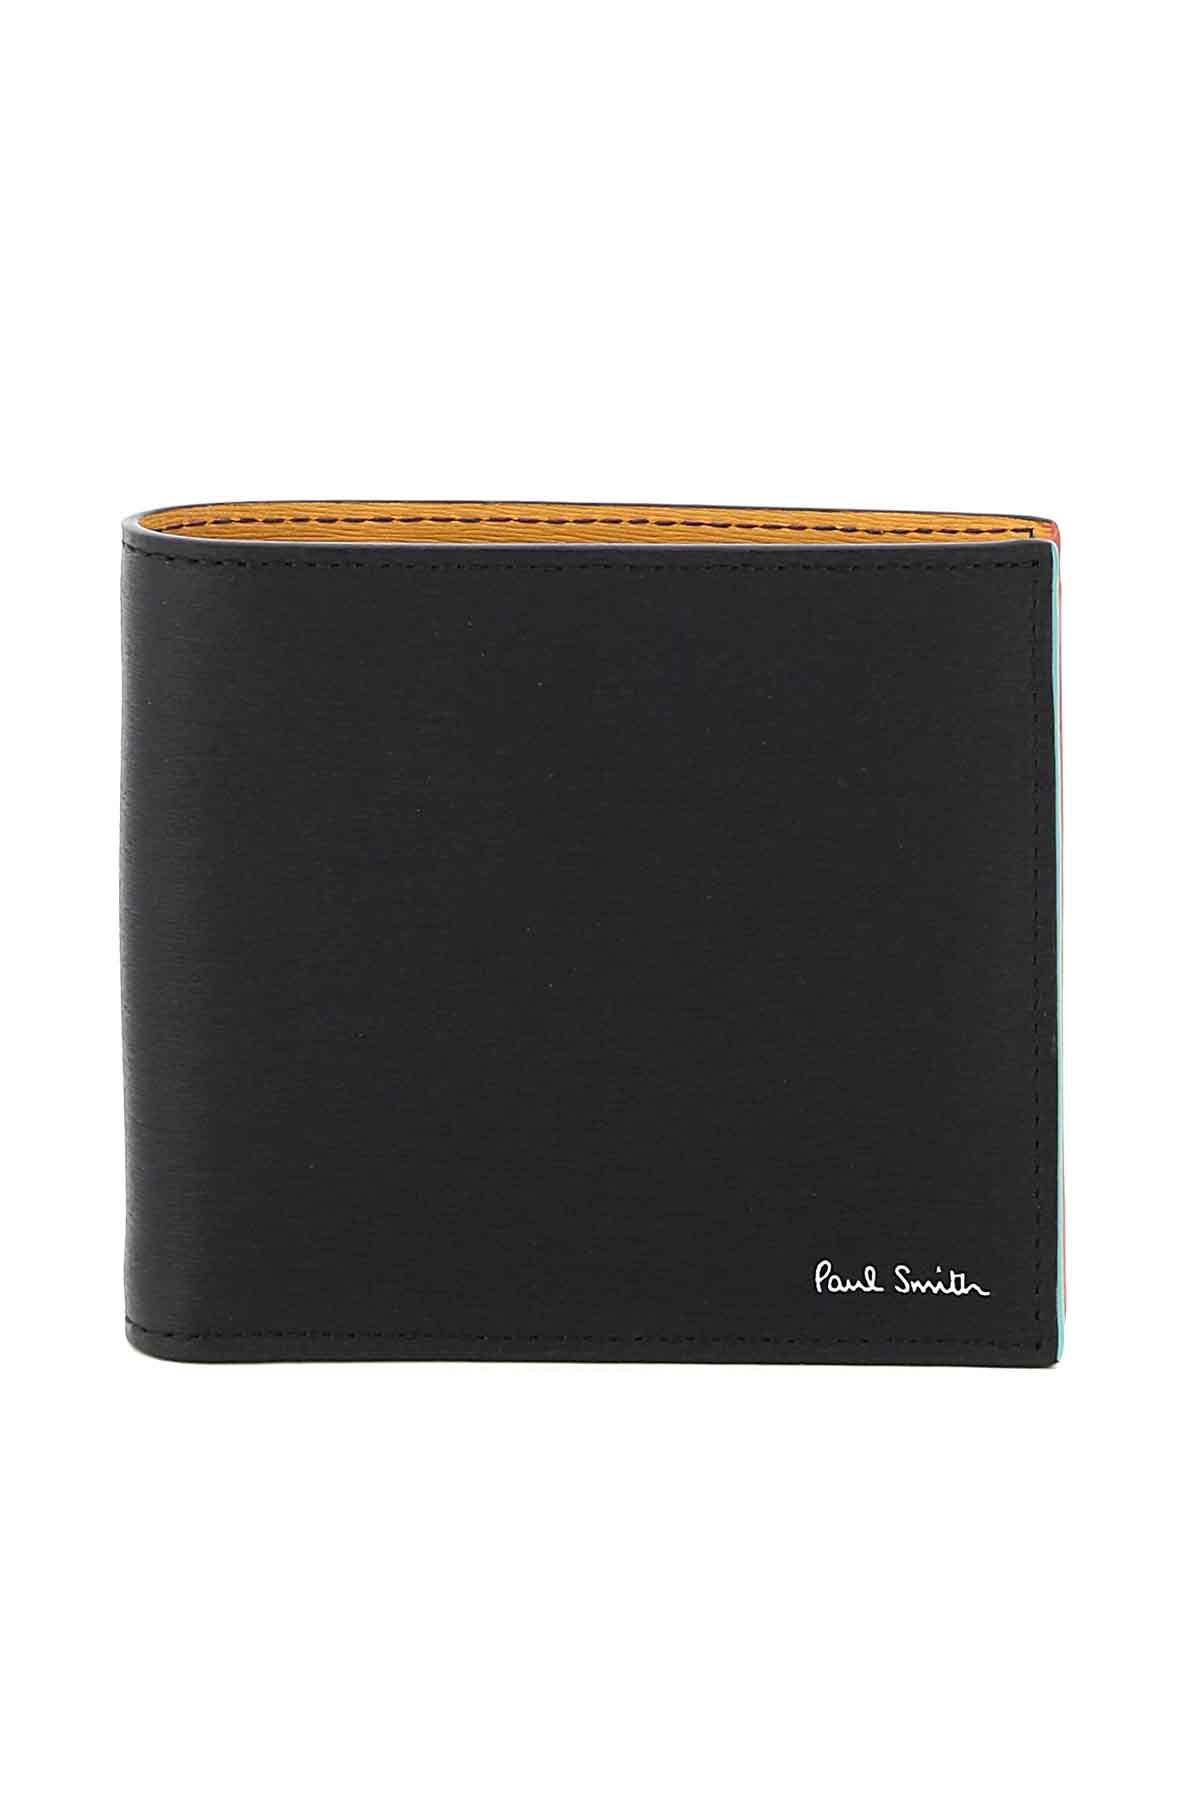 Paul Smith Color Block Bi-fold Wallet